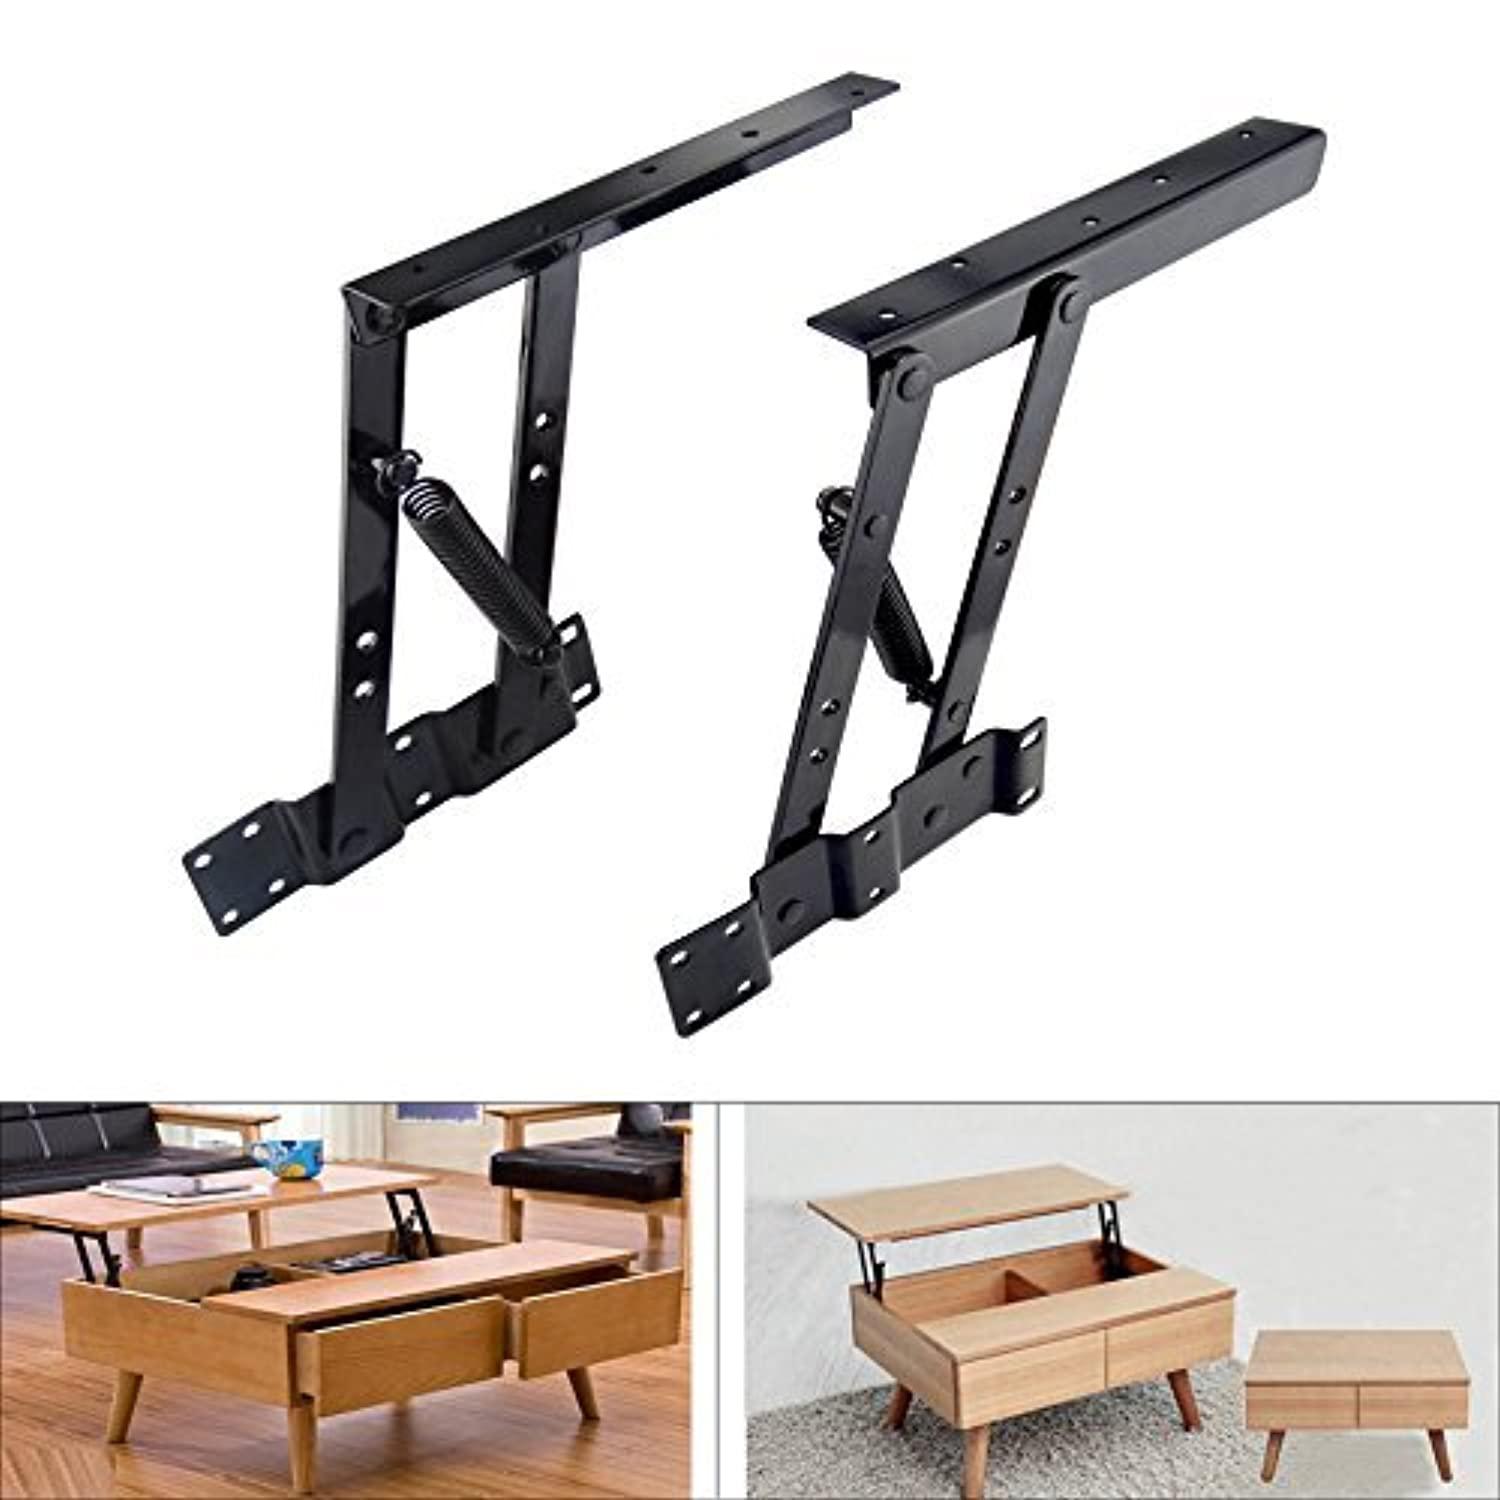 sauton folding lift up top table mechanism, coffee table lift mechanism, spring lift top table hardware for standing desk fra